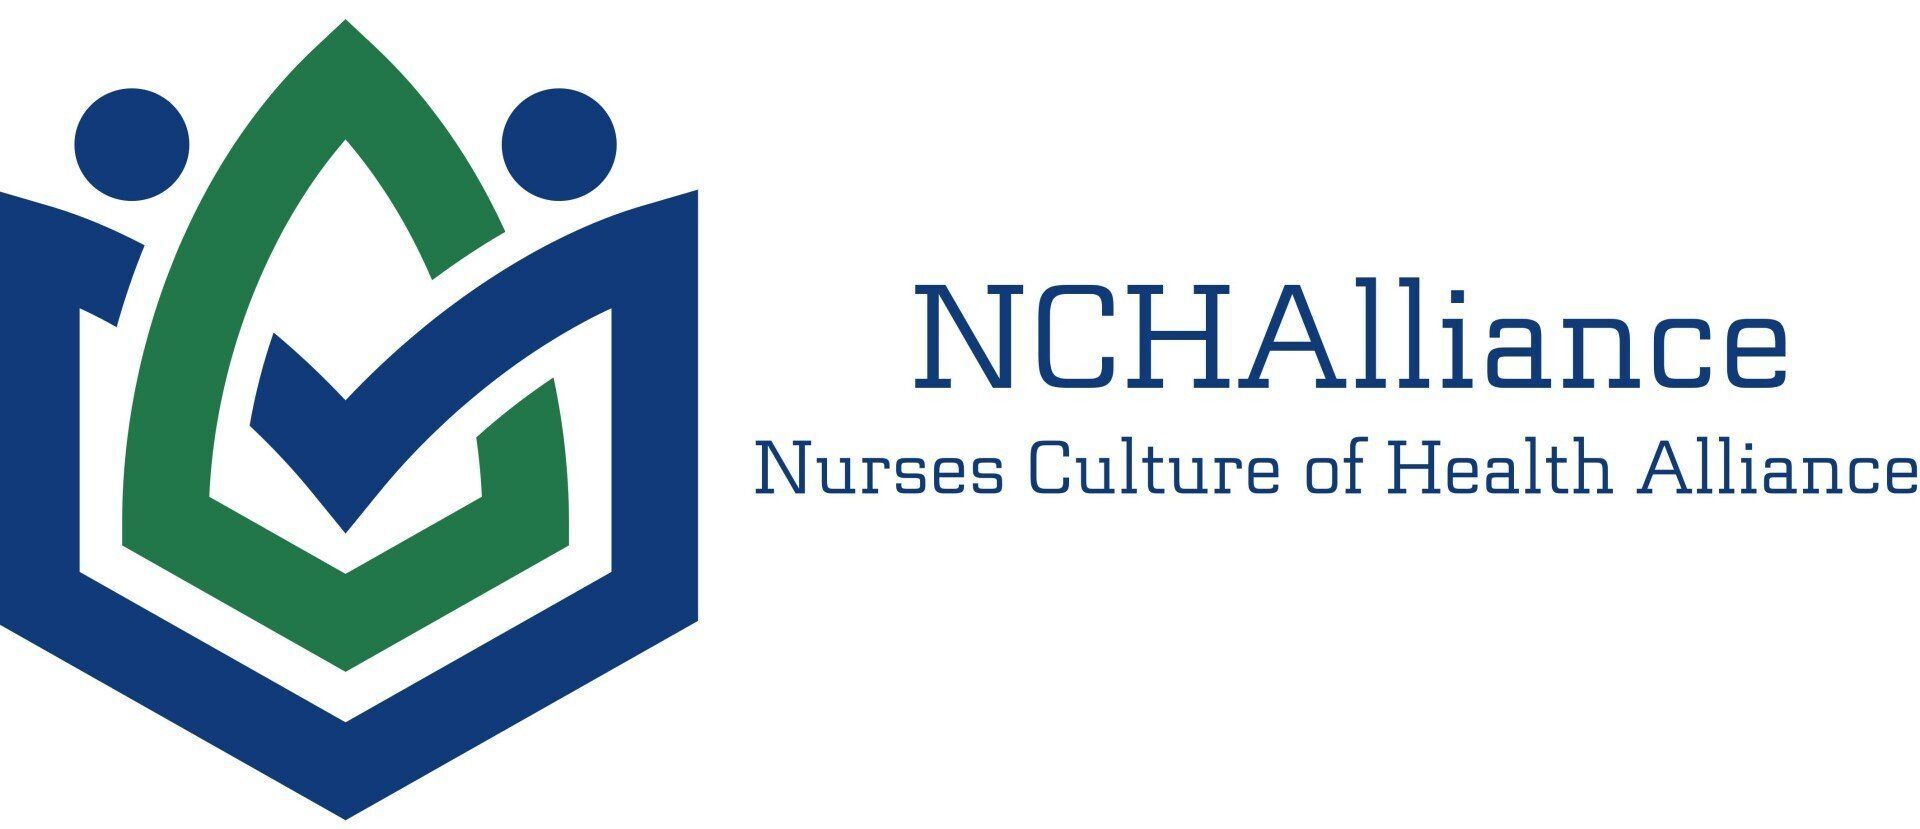 NCHA - Nurses Culture of Health Alliance